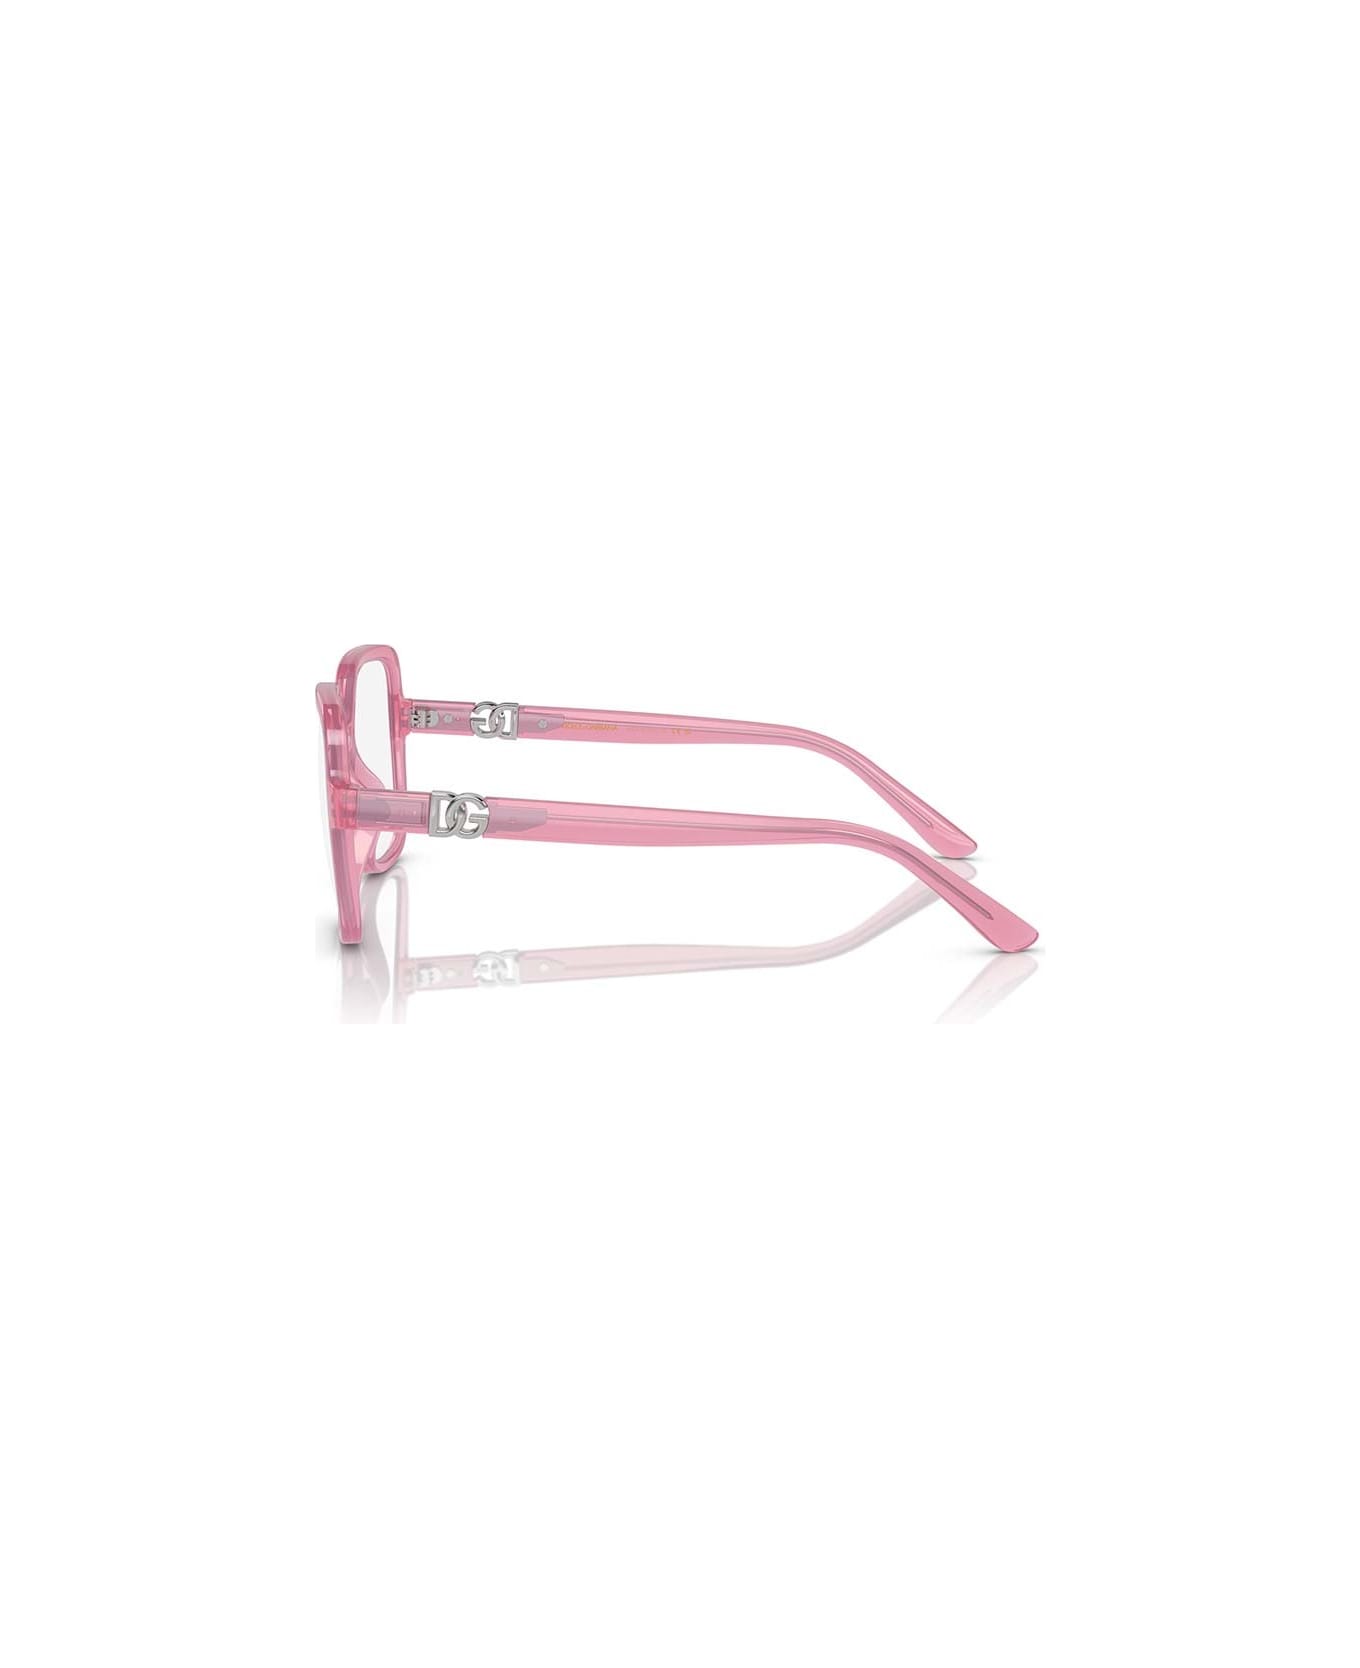 Dolce & Gabbana MEN ACCESSORIES BELTS Eyewear Glasses - Rosa